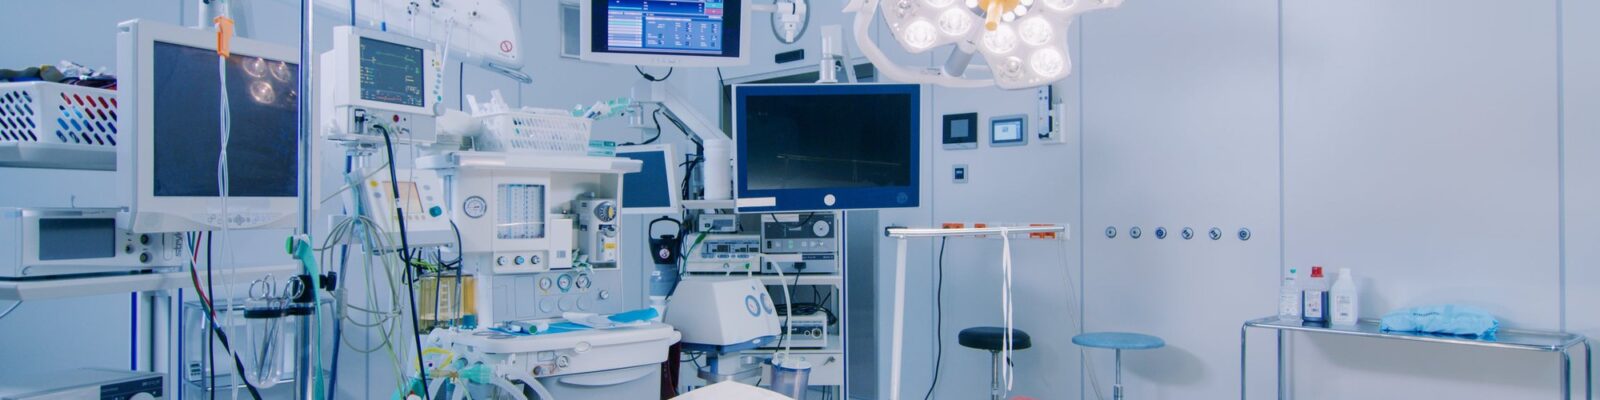 Surgery Center Equipment Image